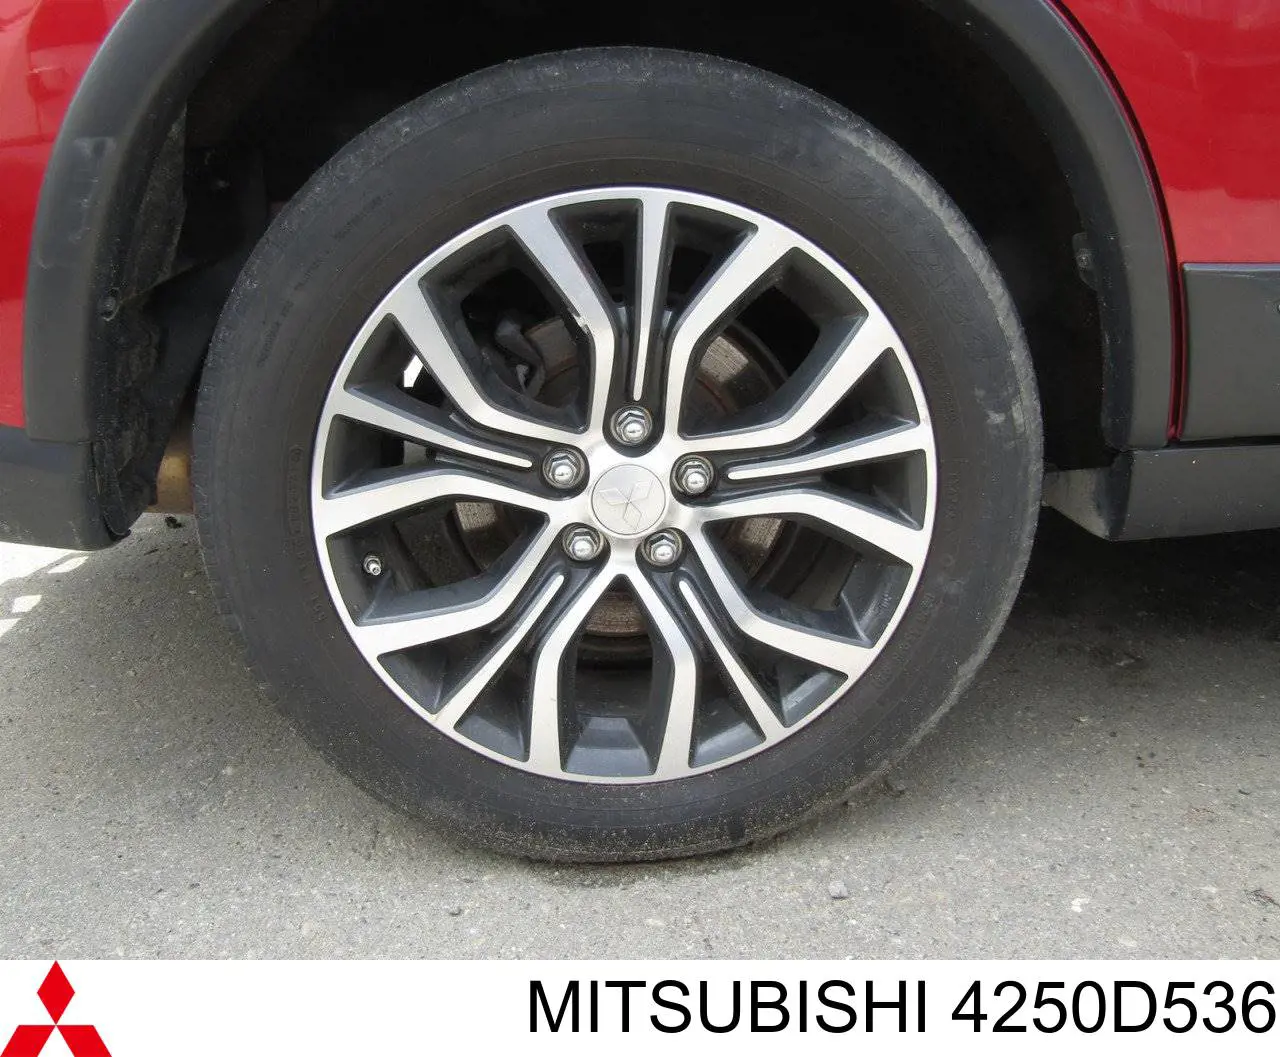 4250D536 Mitsubishi llantas de aleacion, (aleacion de titanio)